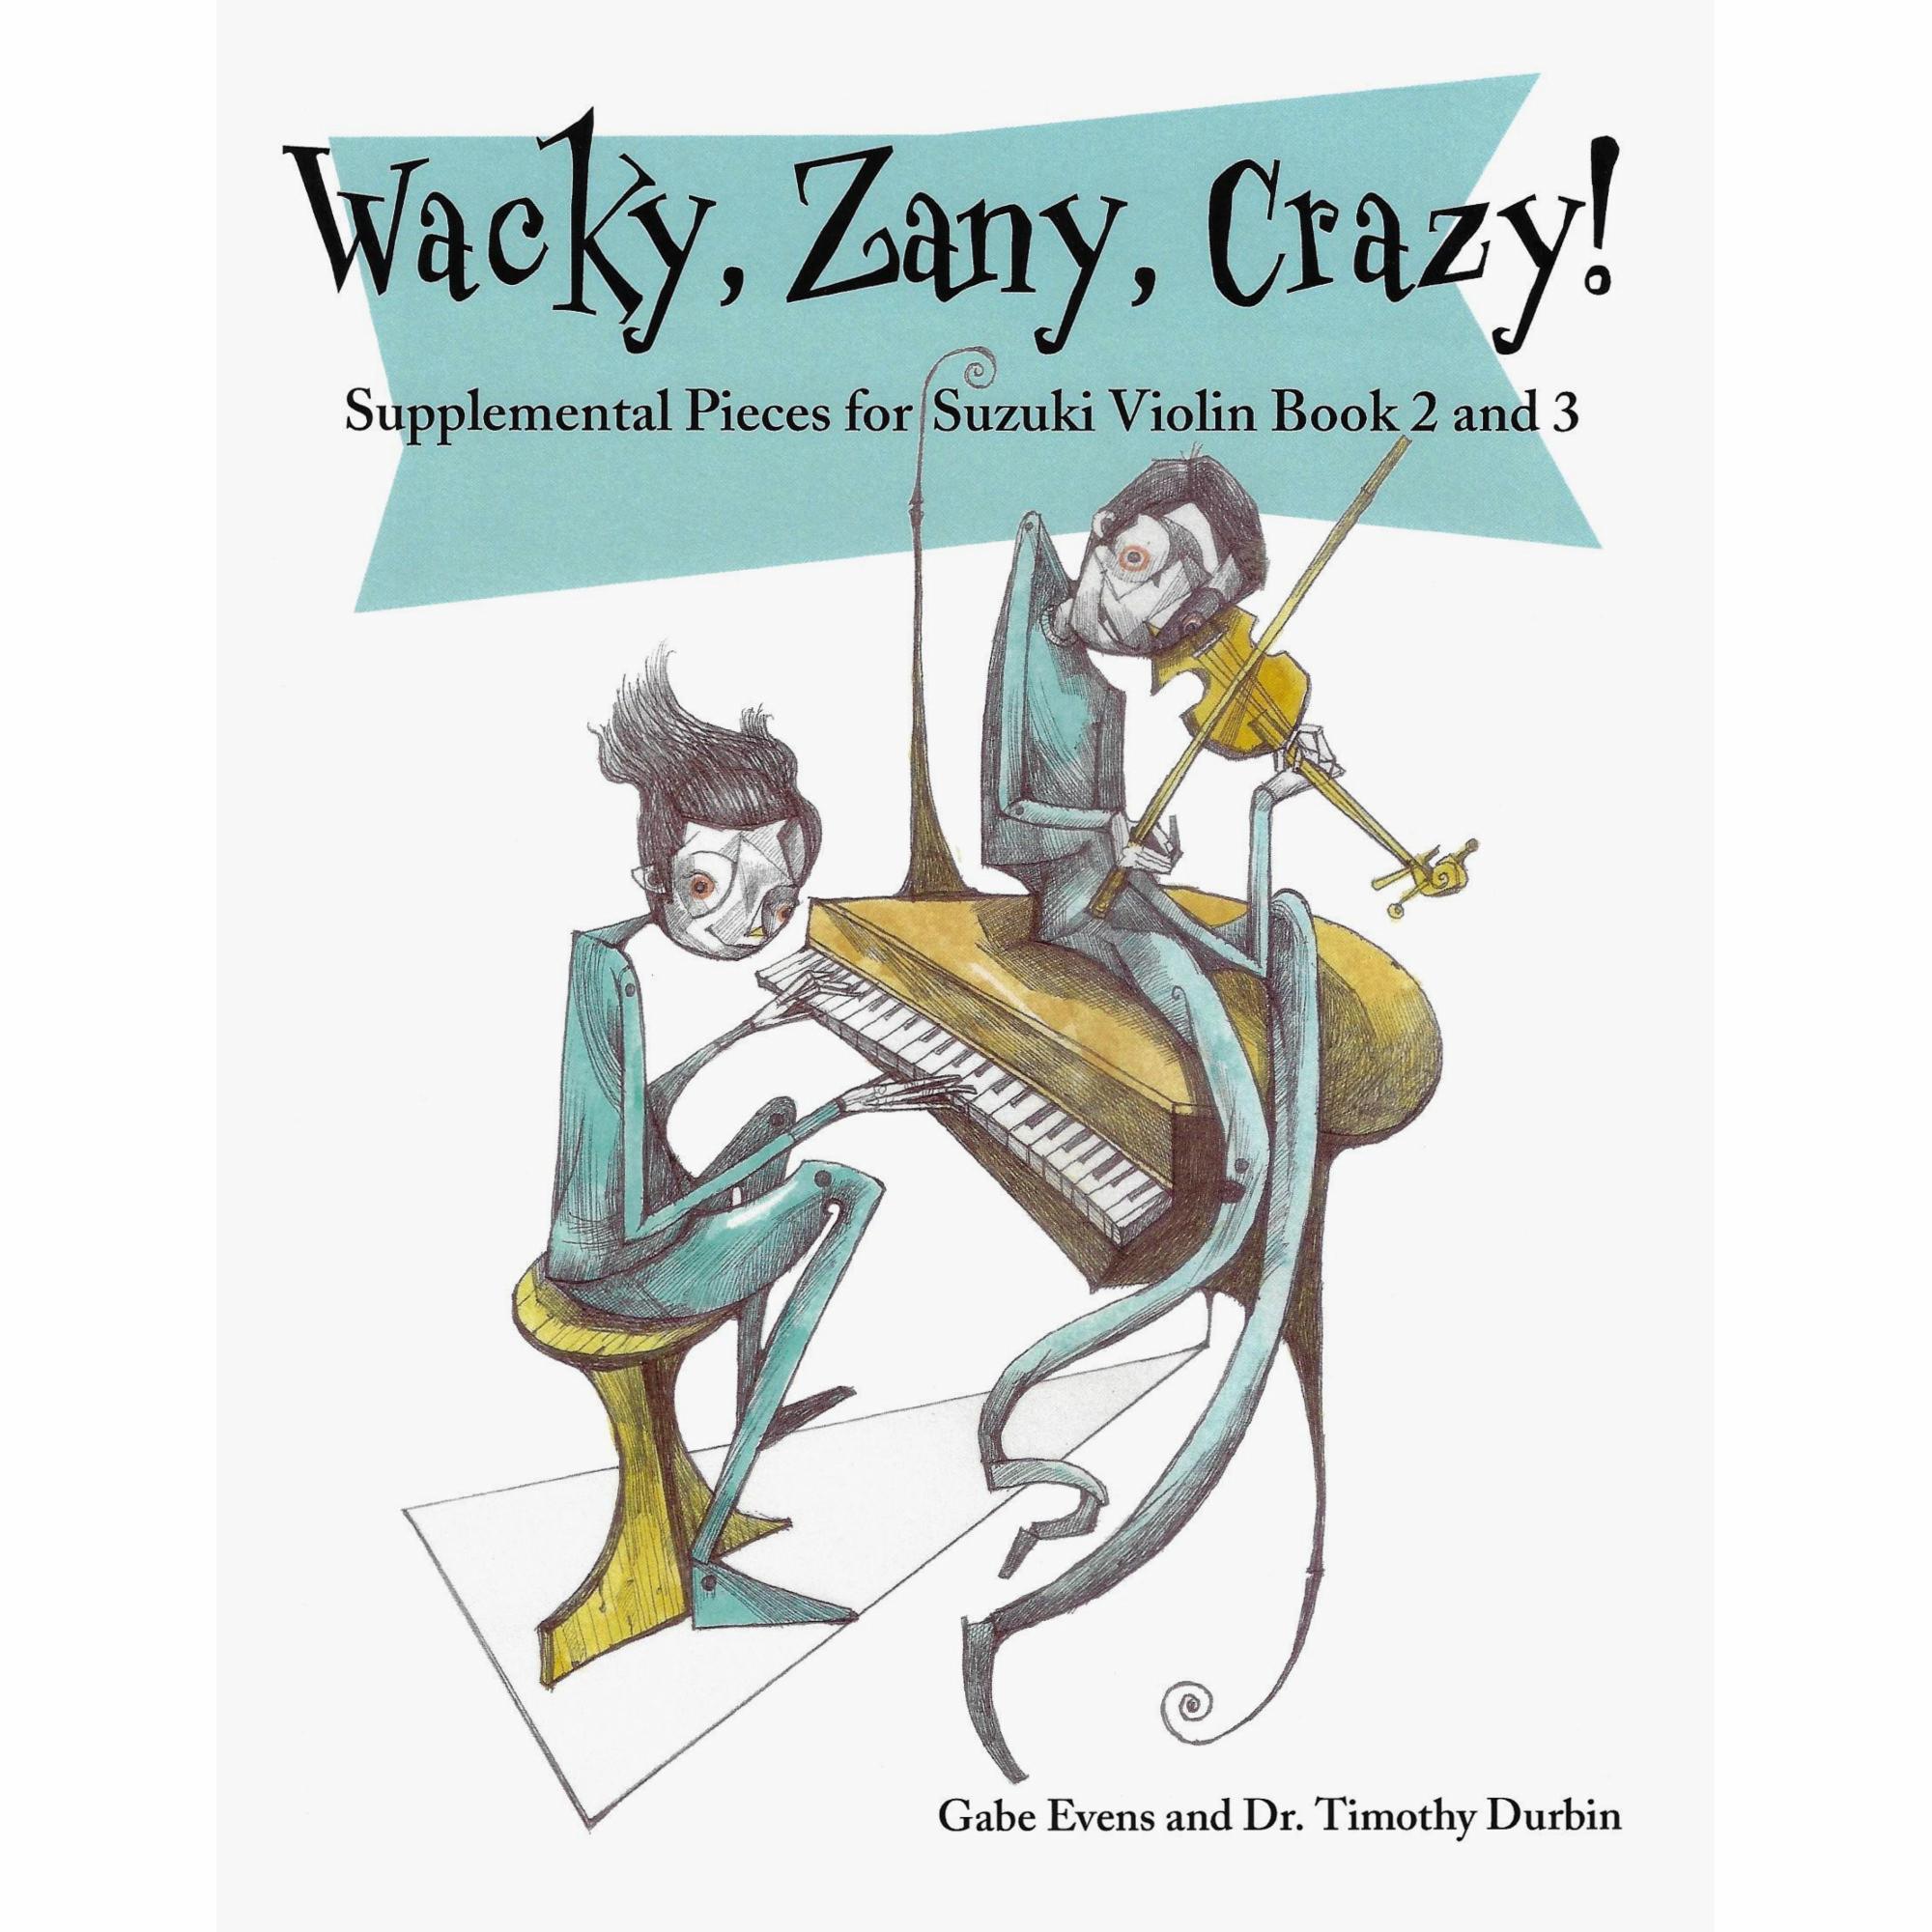 Wacky, Zany, Crazy!: Supplemental Pieces for Suzuki Violin Book 2 and 3